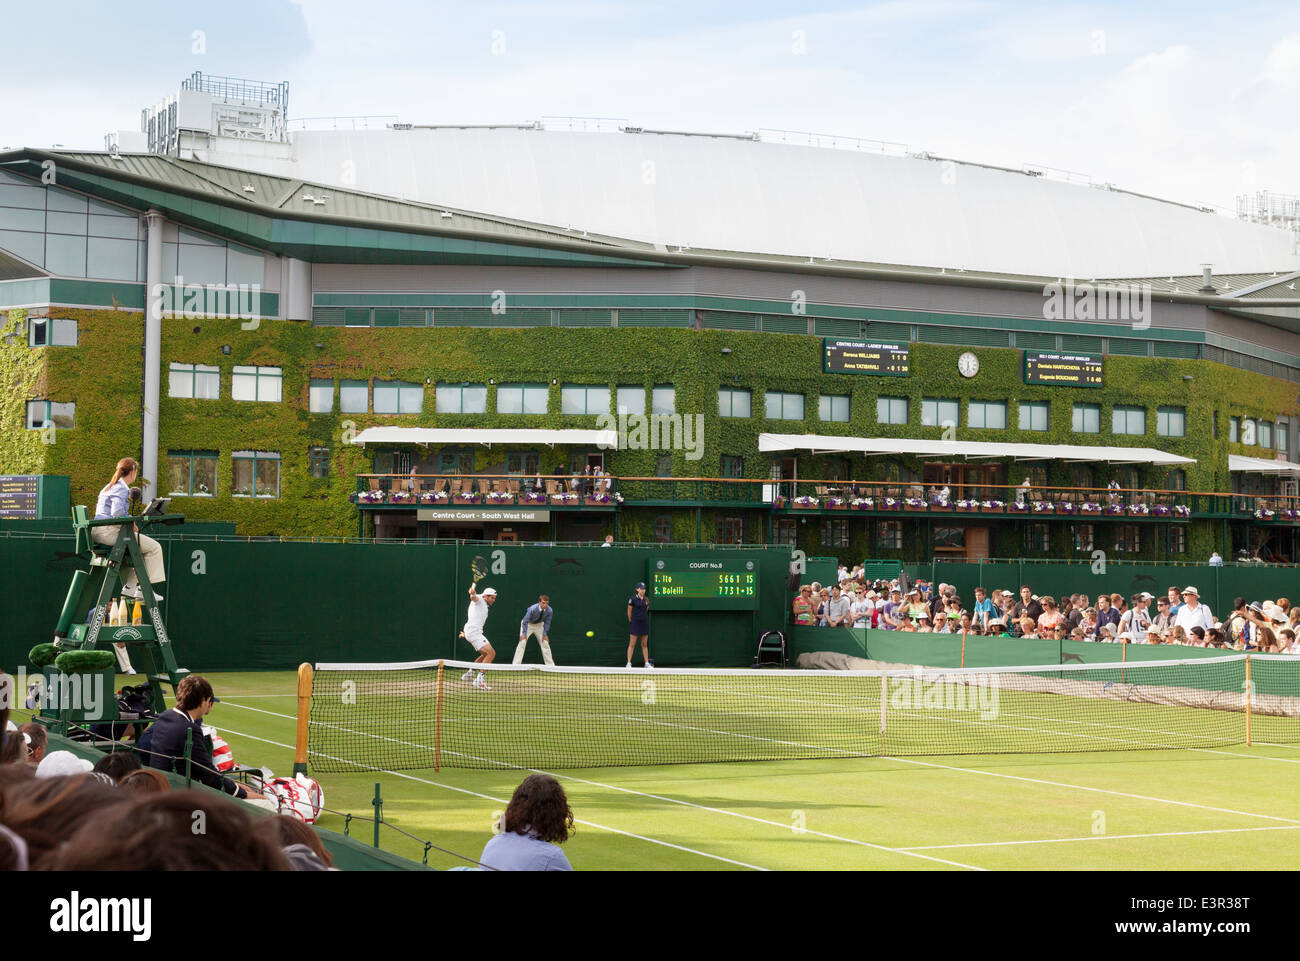 Tennis-Match auf einem äußeren Gericht, den Wimbledon All England Lawn Tennis Club Championships, Wimbledon London UK Stockfoto